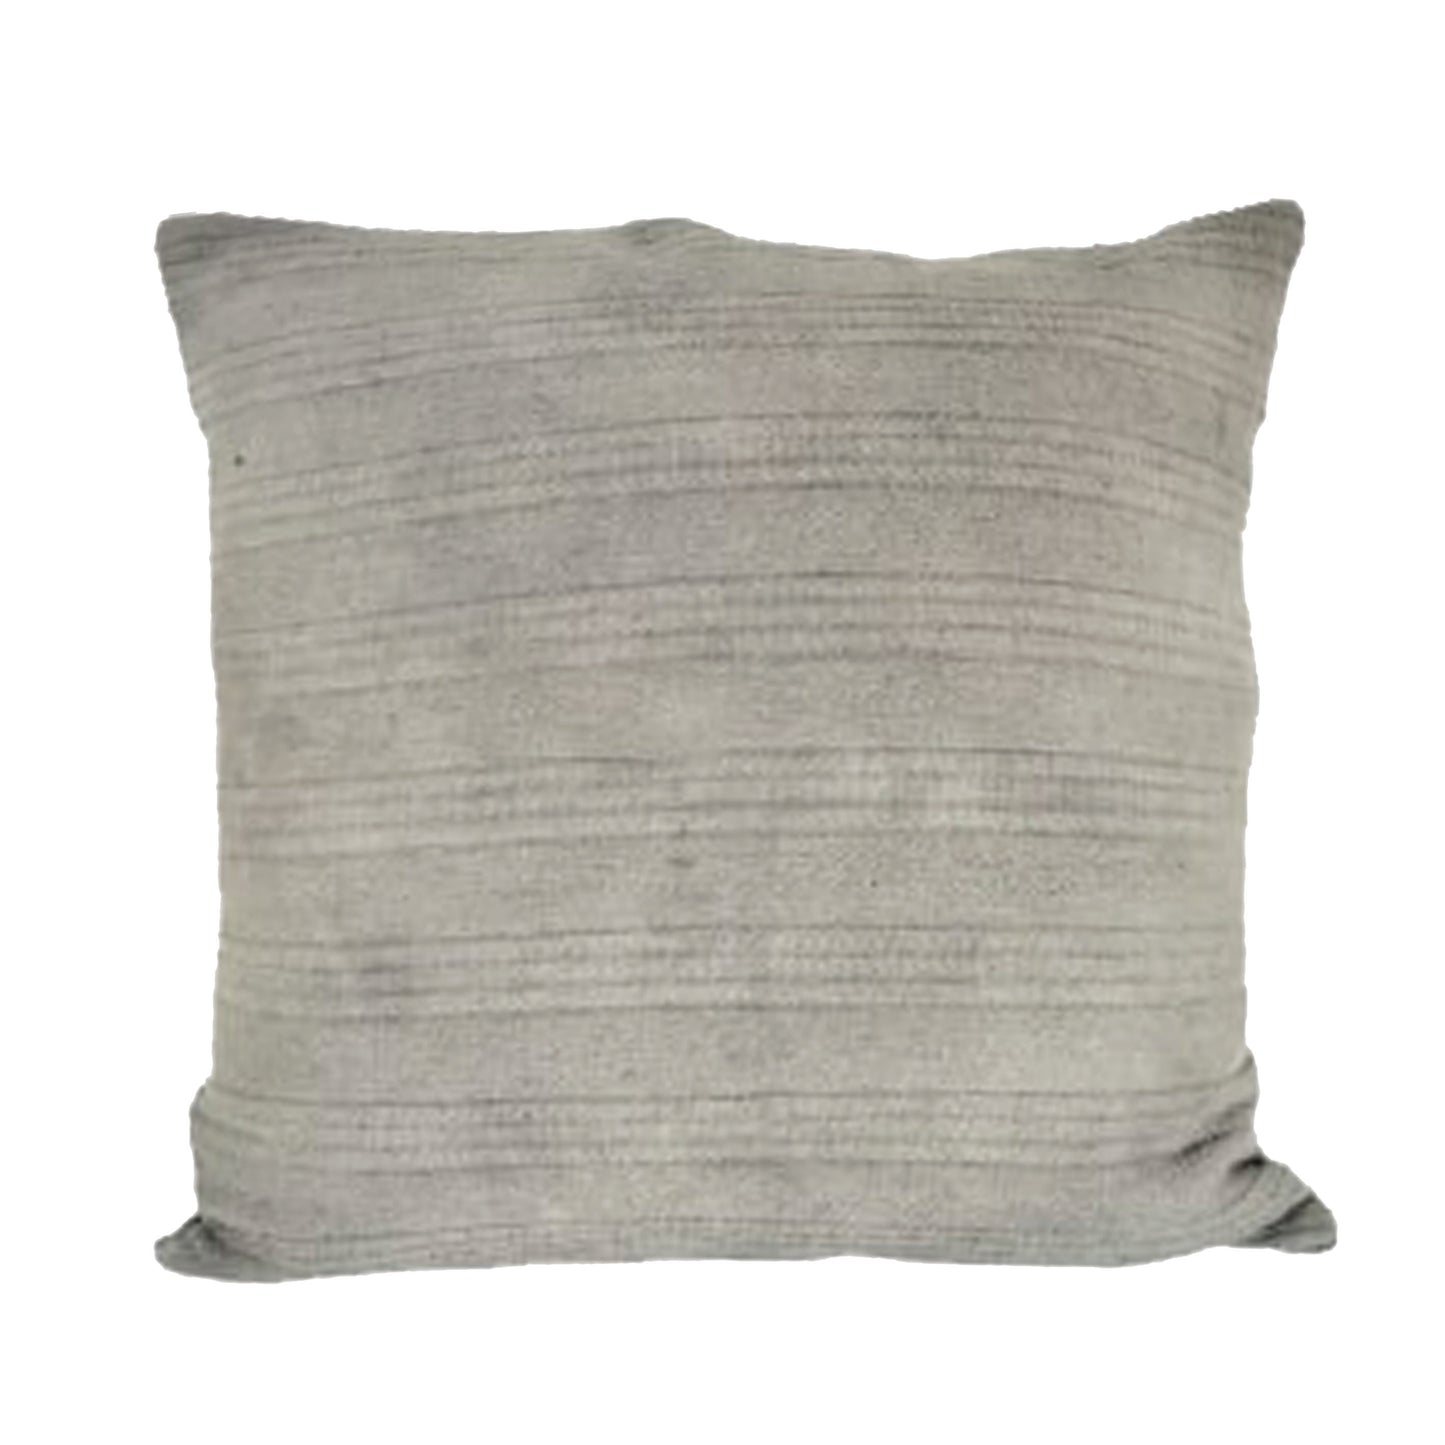 Natural Dye Pillow Cover - Tea & Iron